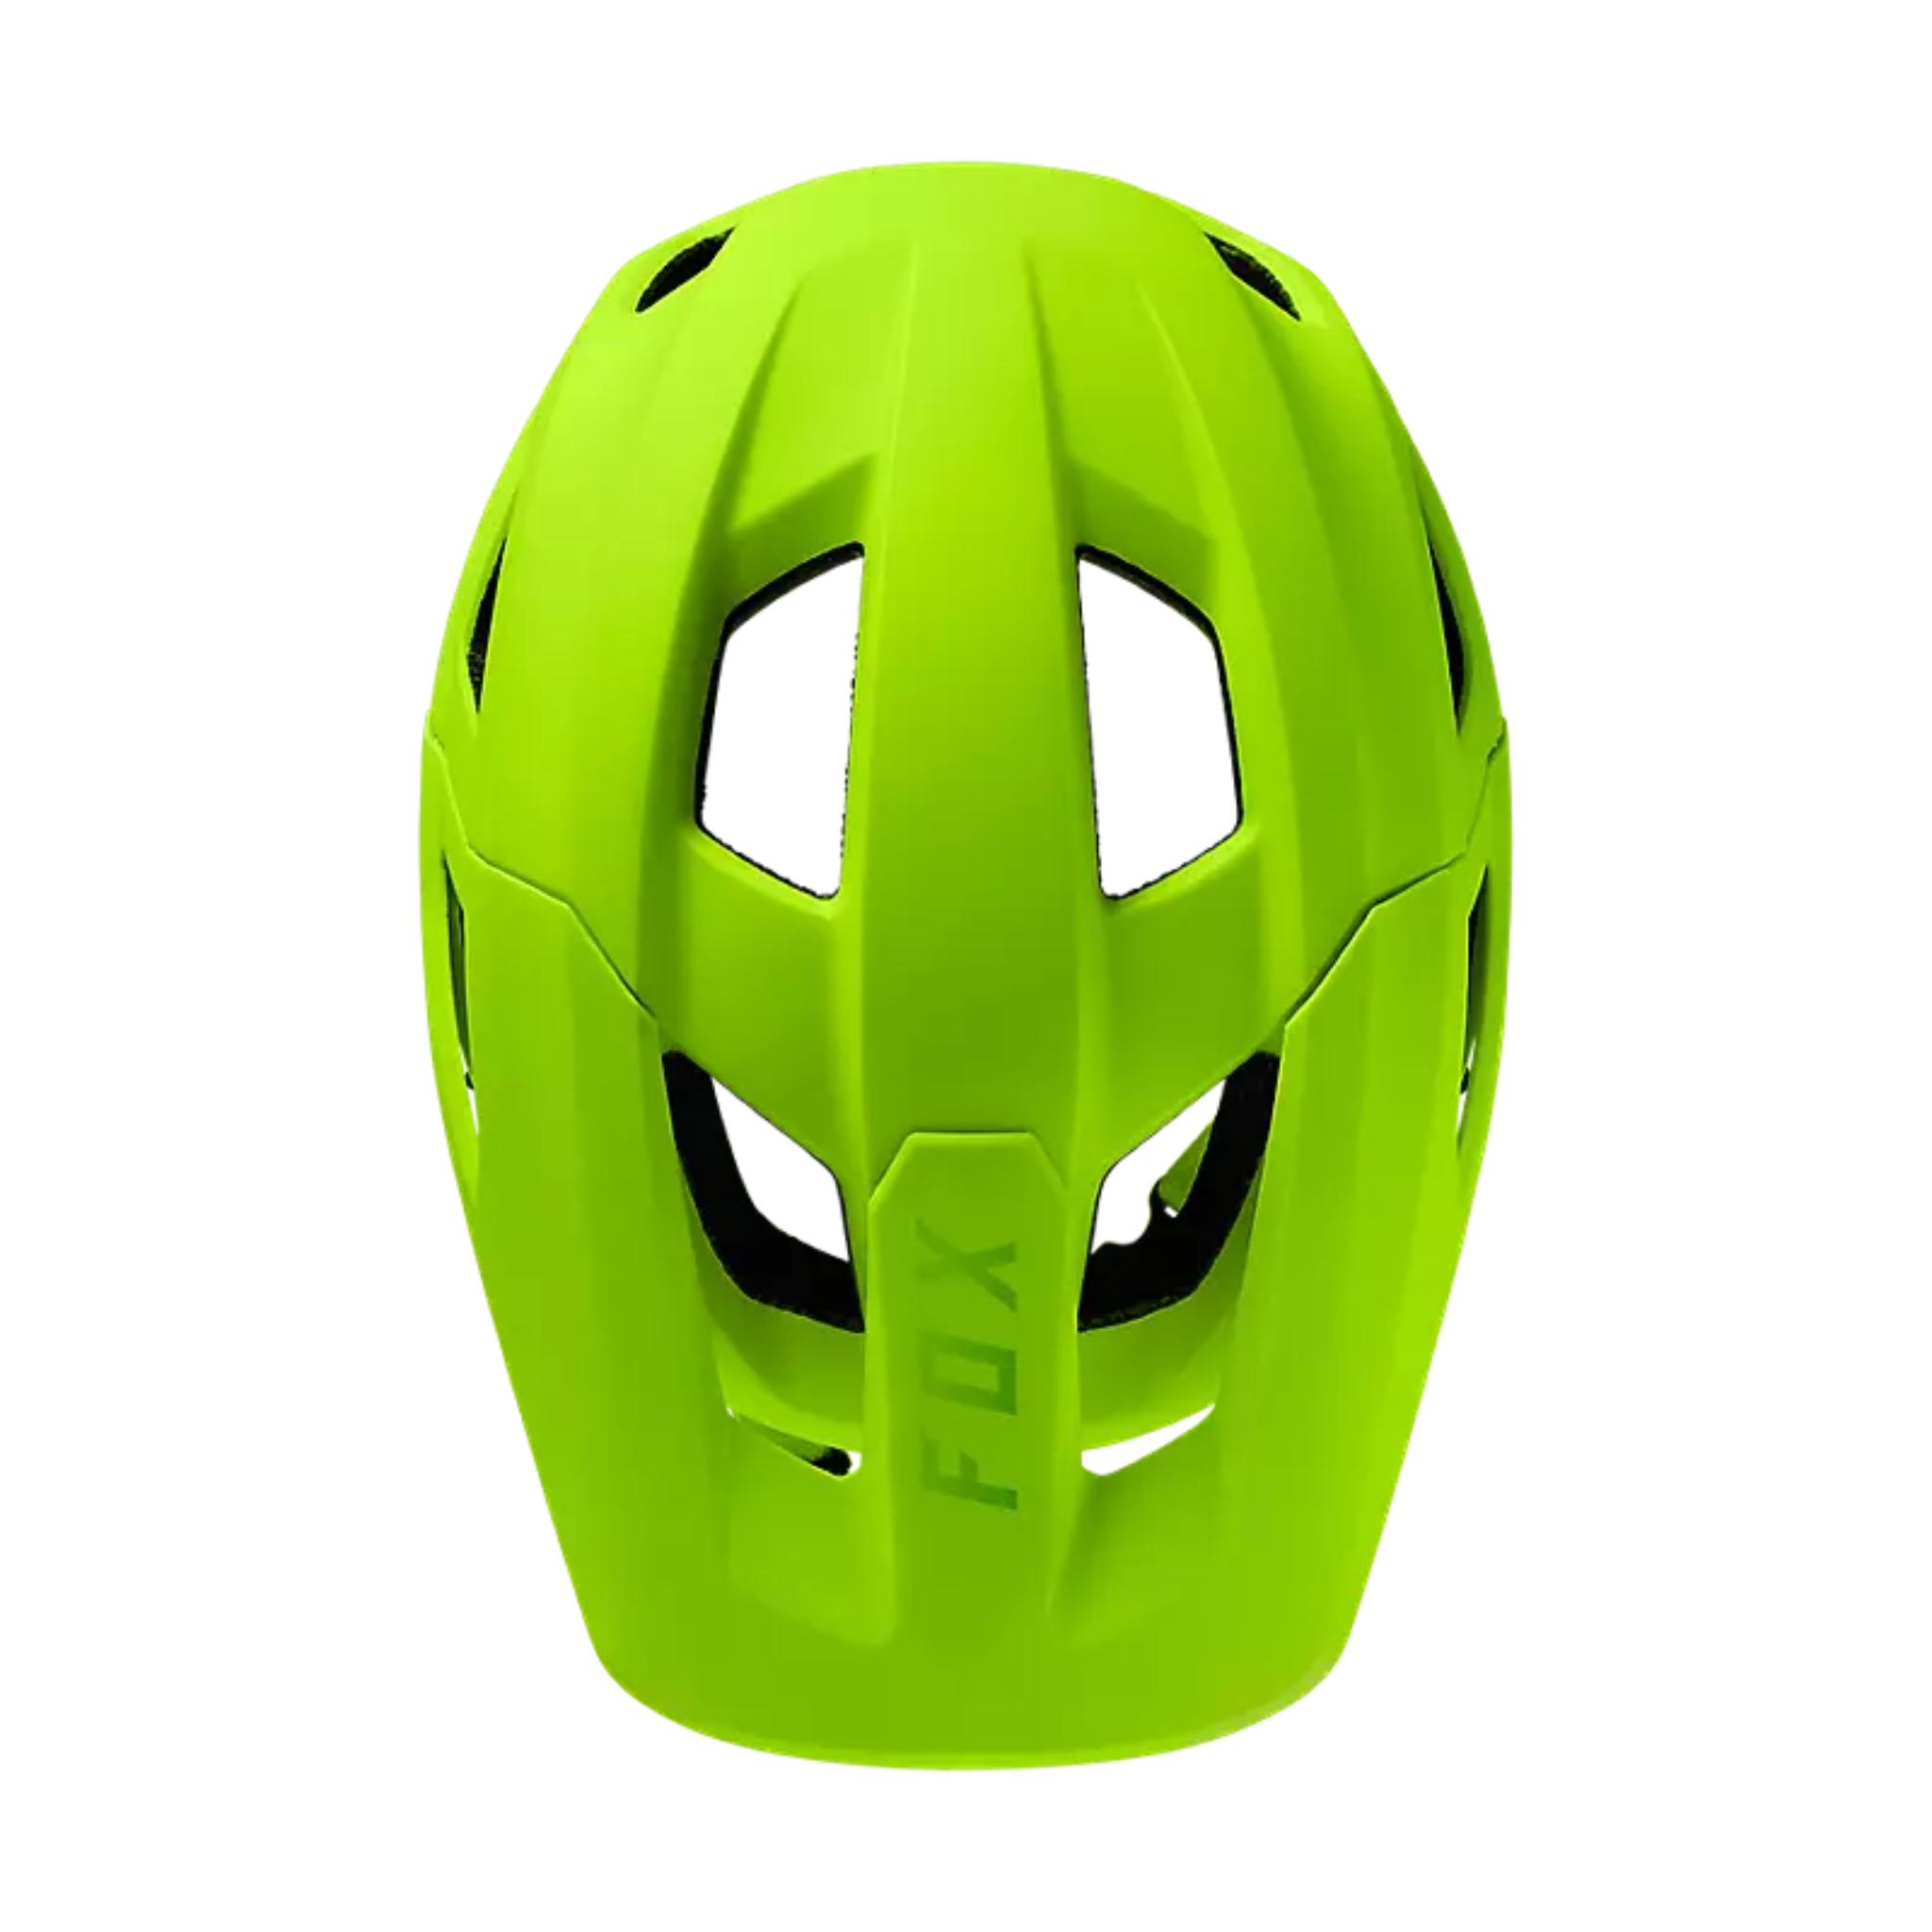 Fox Youth Mainframe MIPS Helmet